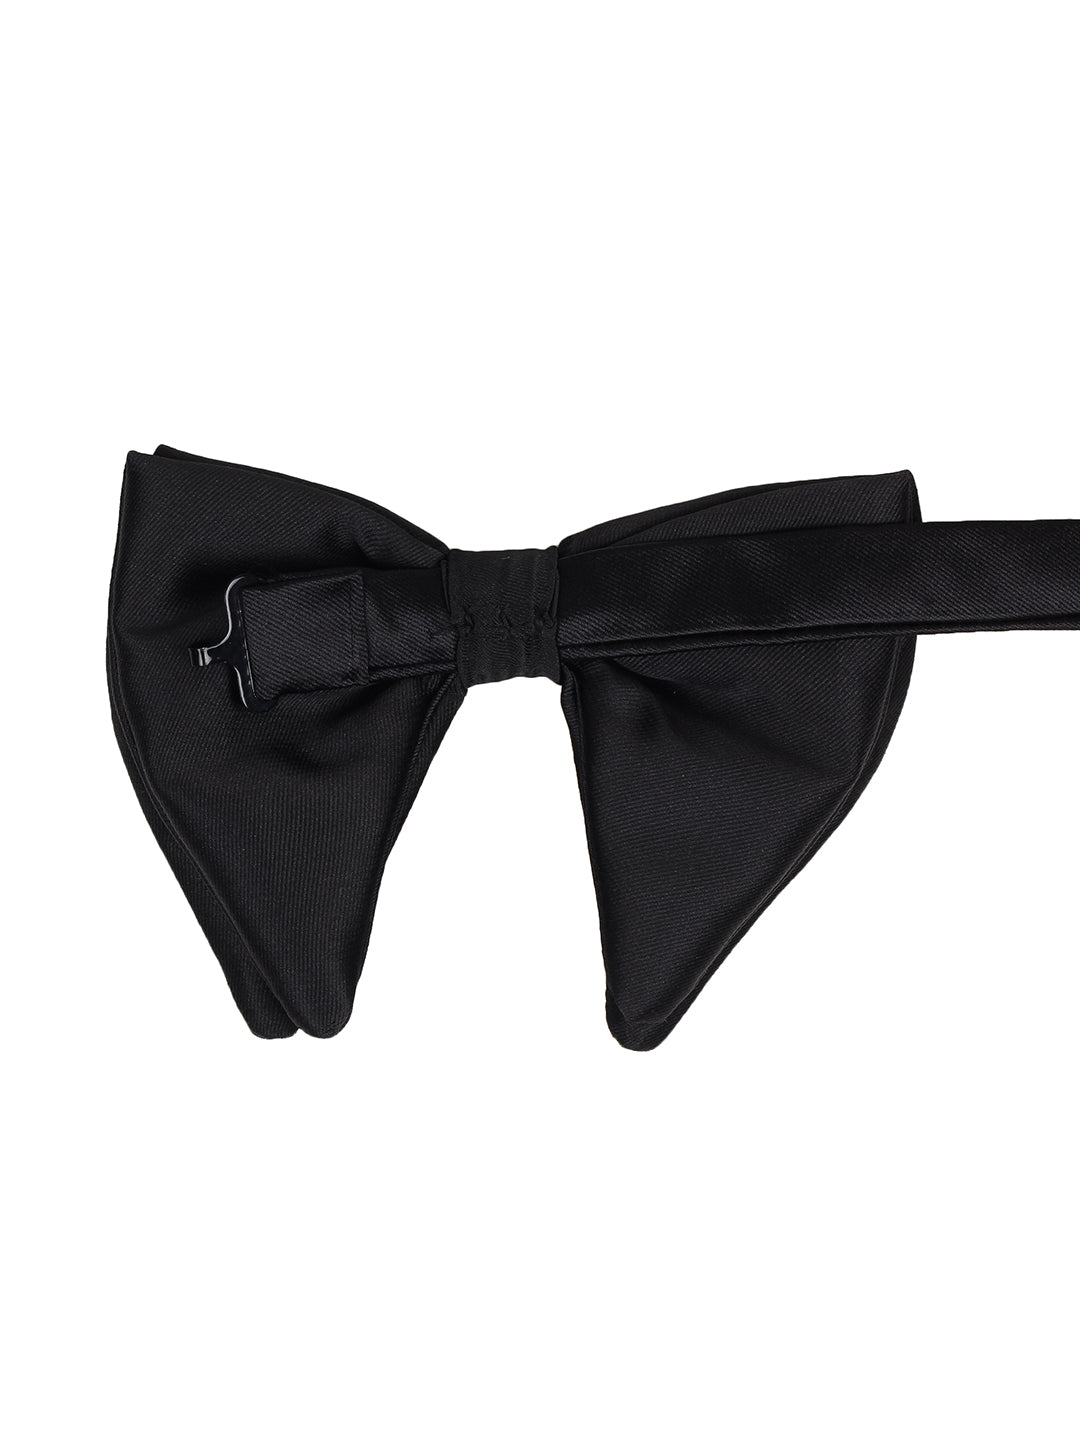 Alvaro Castagnino Men's Black Colored Floppy Solid Bow Tie